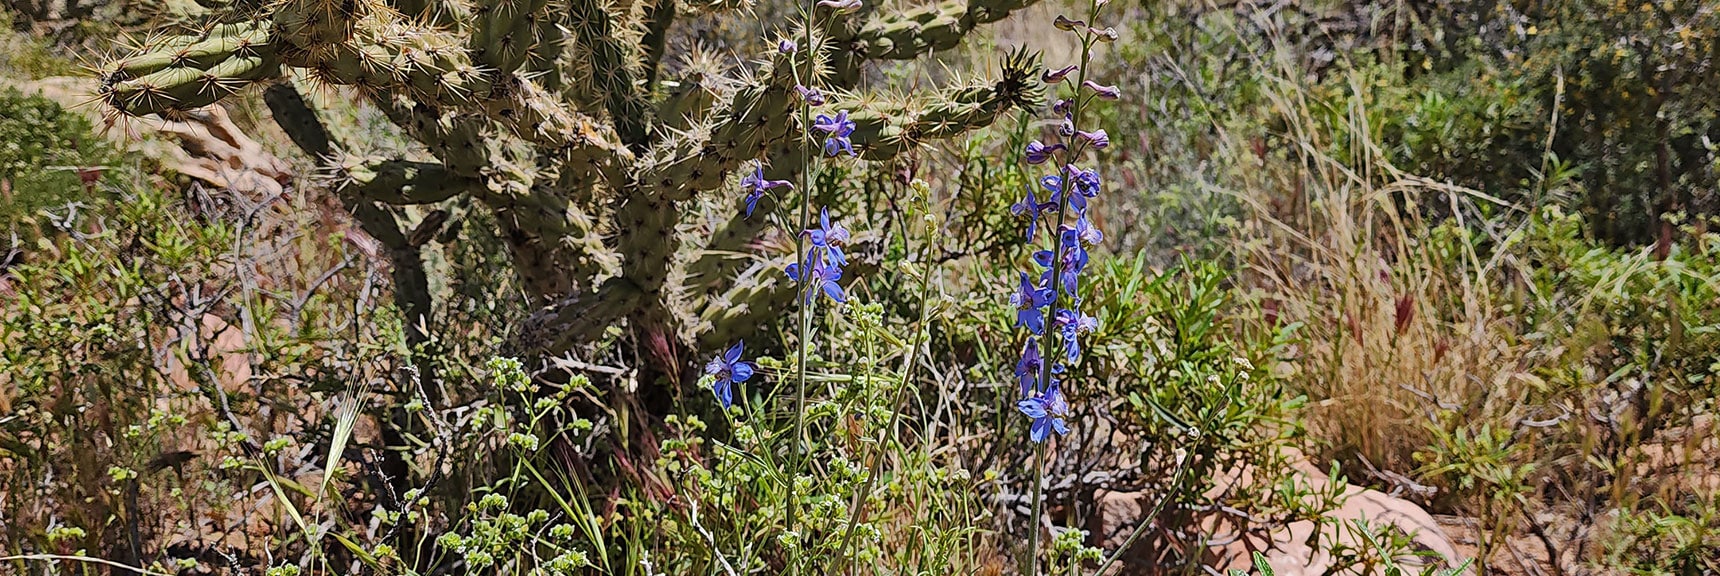 Desert Lupine : Annual Mojave Desert Wildflowers | Juniper Canyon | Red Rock Canyon National Conservation Area, Nevada | David Smith | LasVegasAreaTrails.com